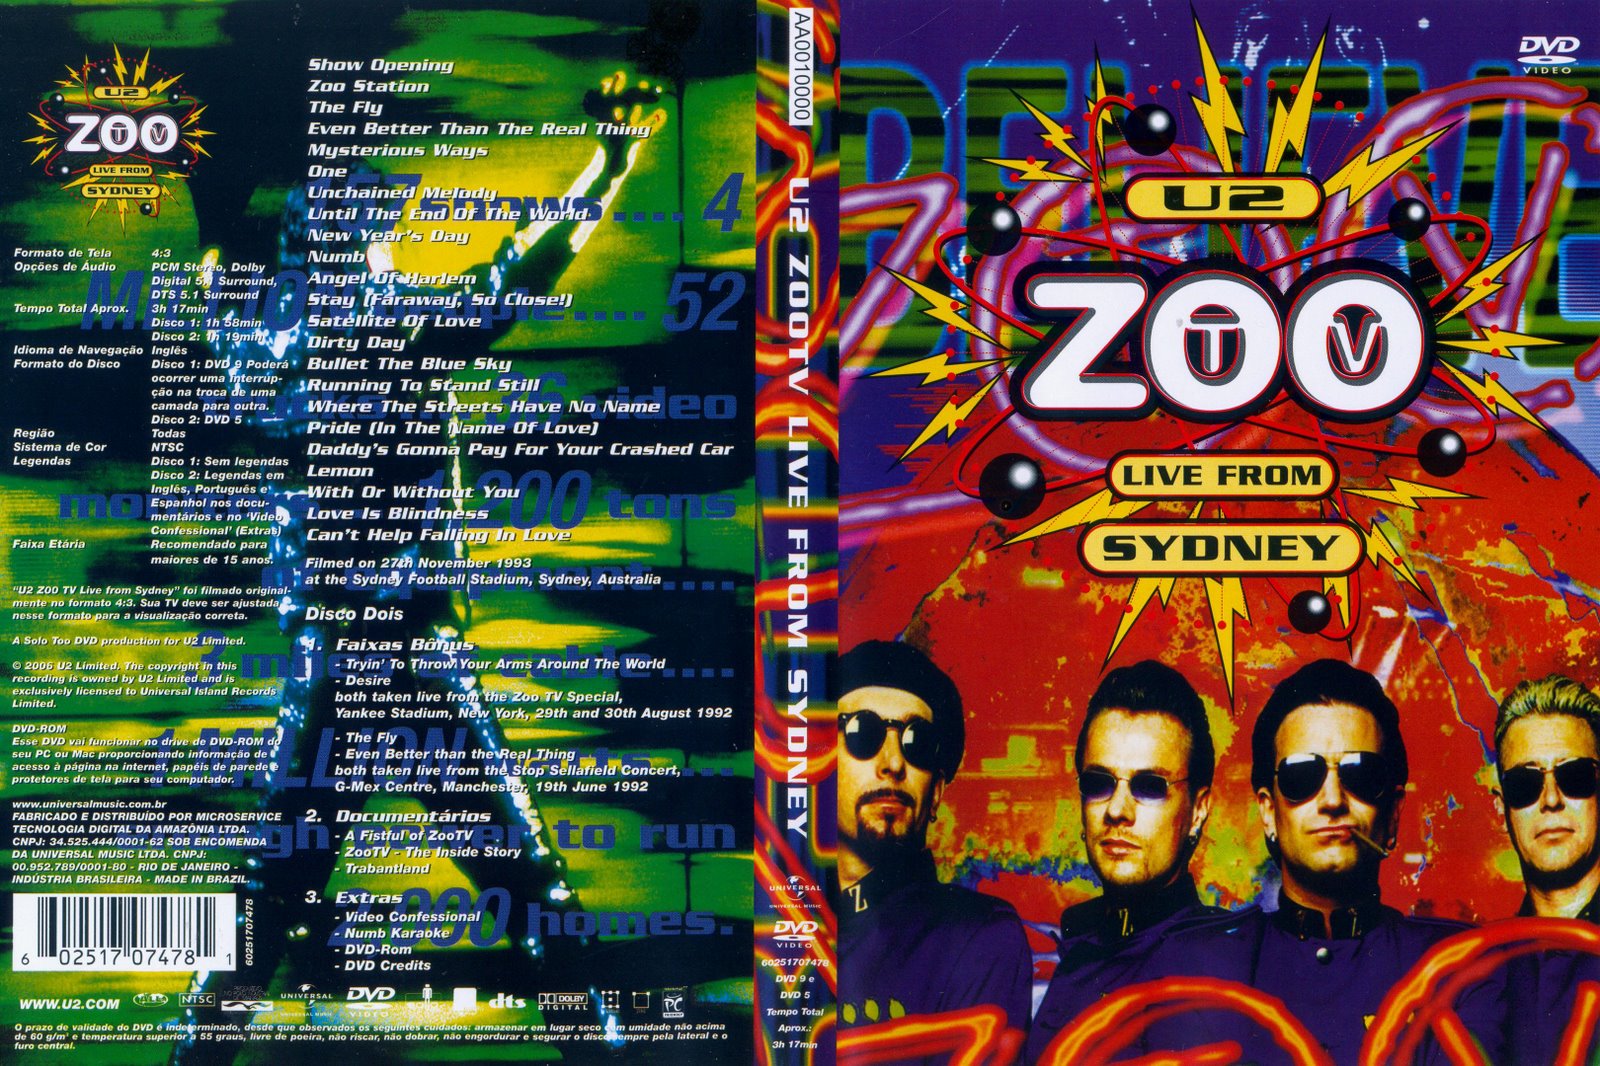 U2_-_Zoo_TV_-_Live_From_Sydney.jpg